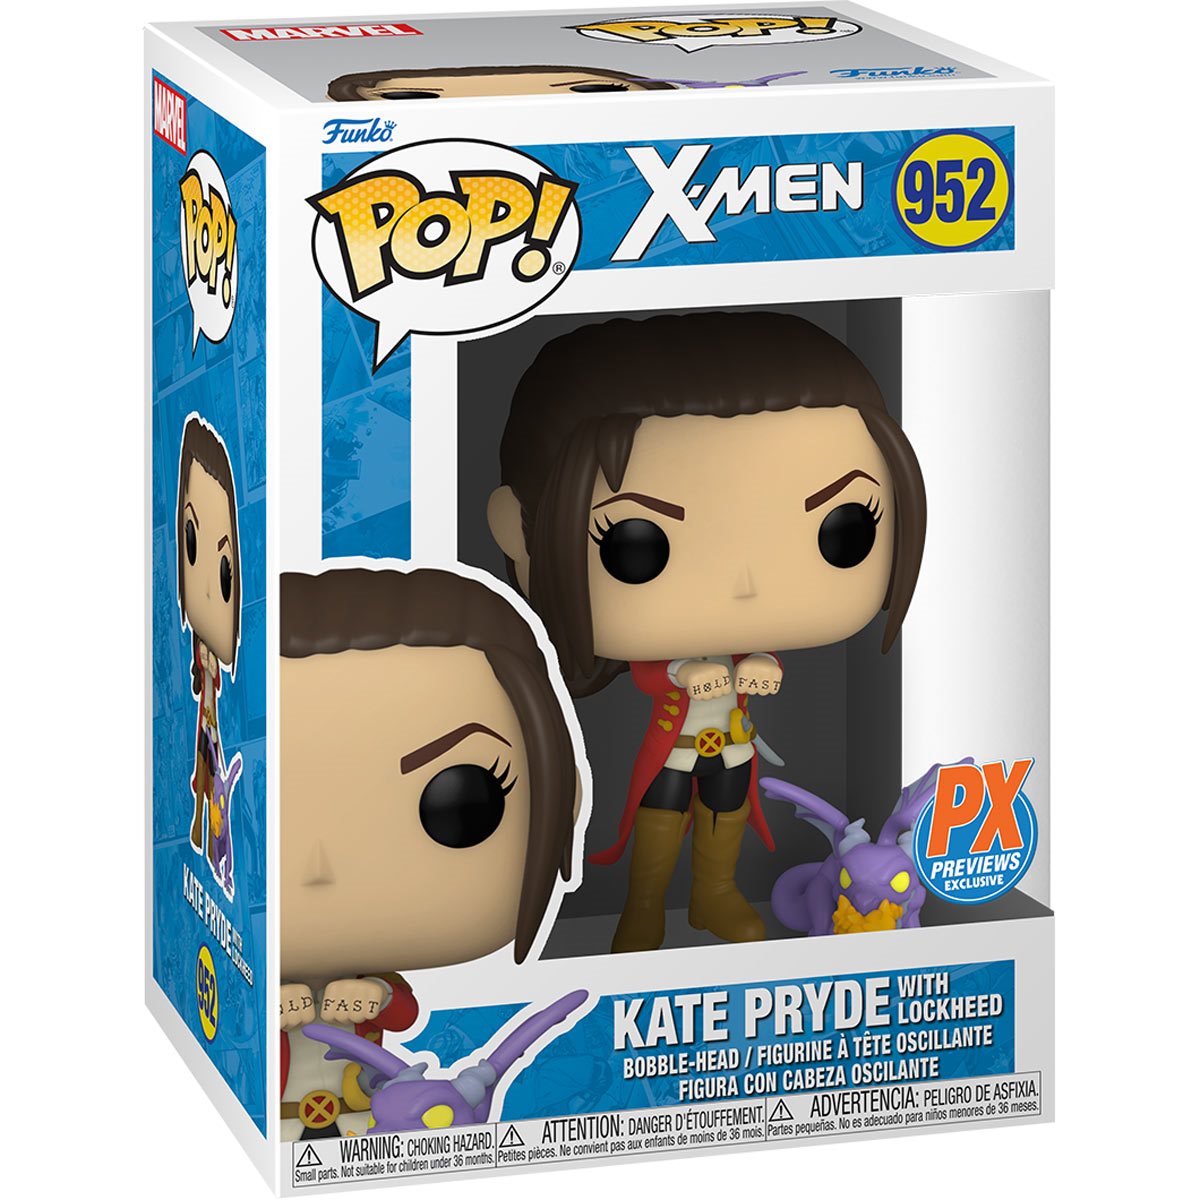 Kate Pryde with Lockheed 952 PX - Funko Pop! X-Men